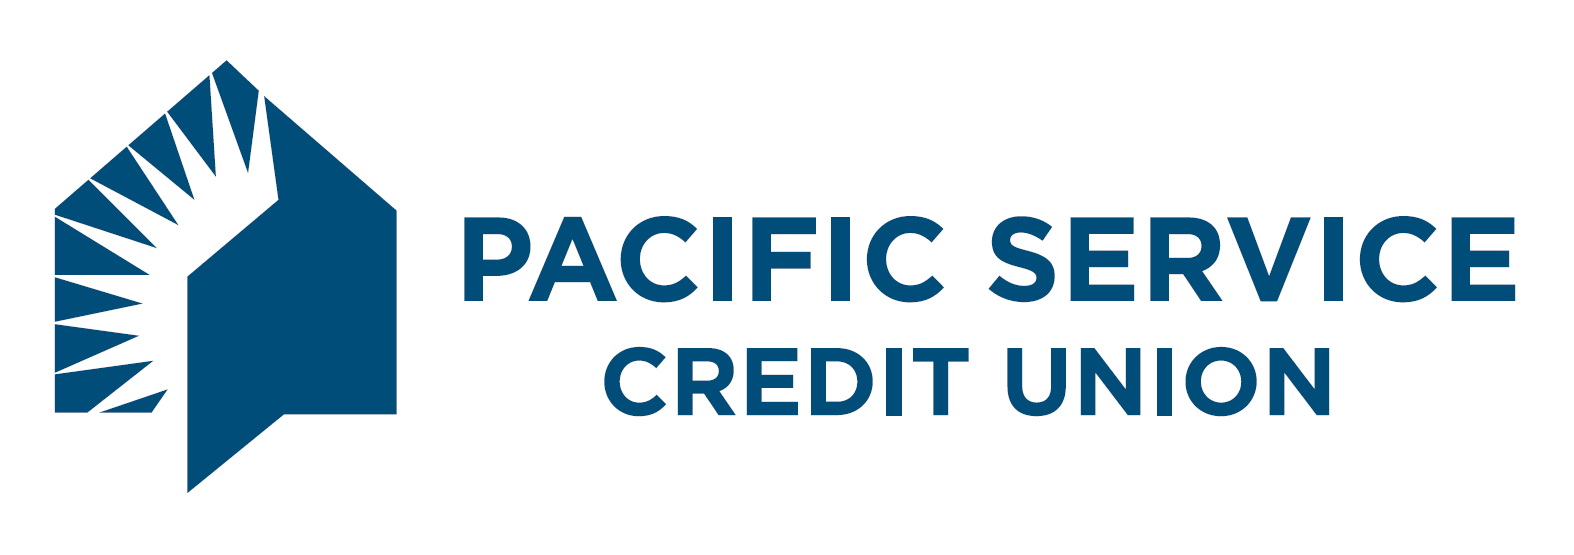 Pacific Service Credit Union (Platinum)